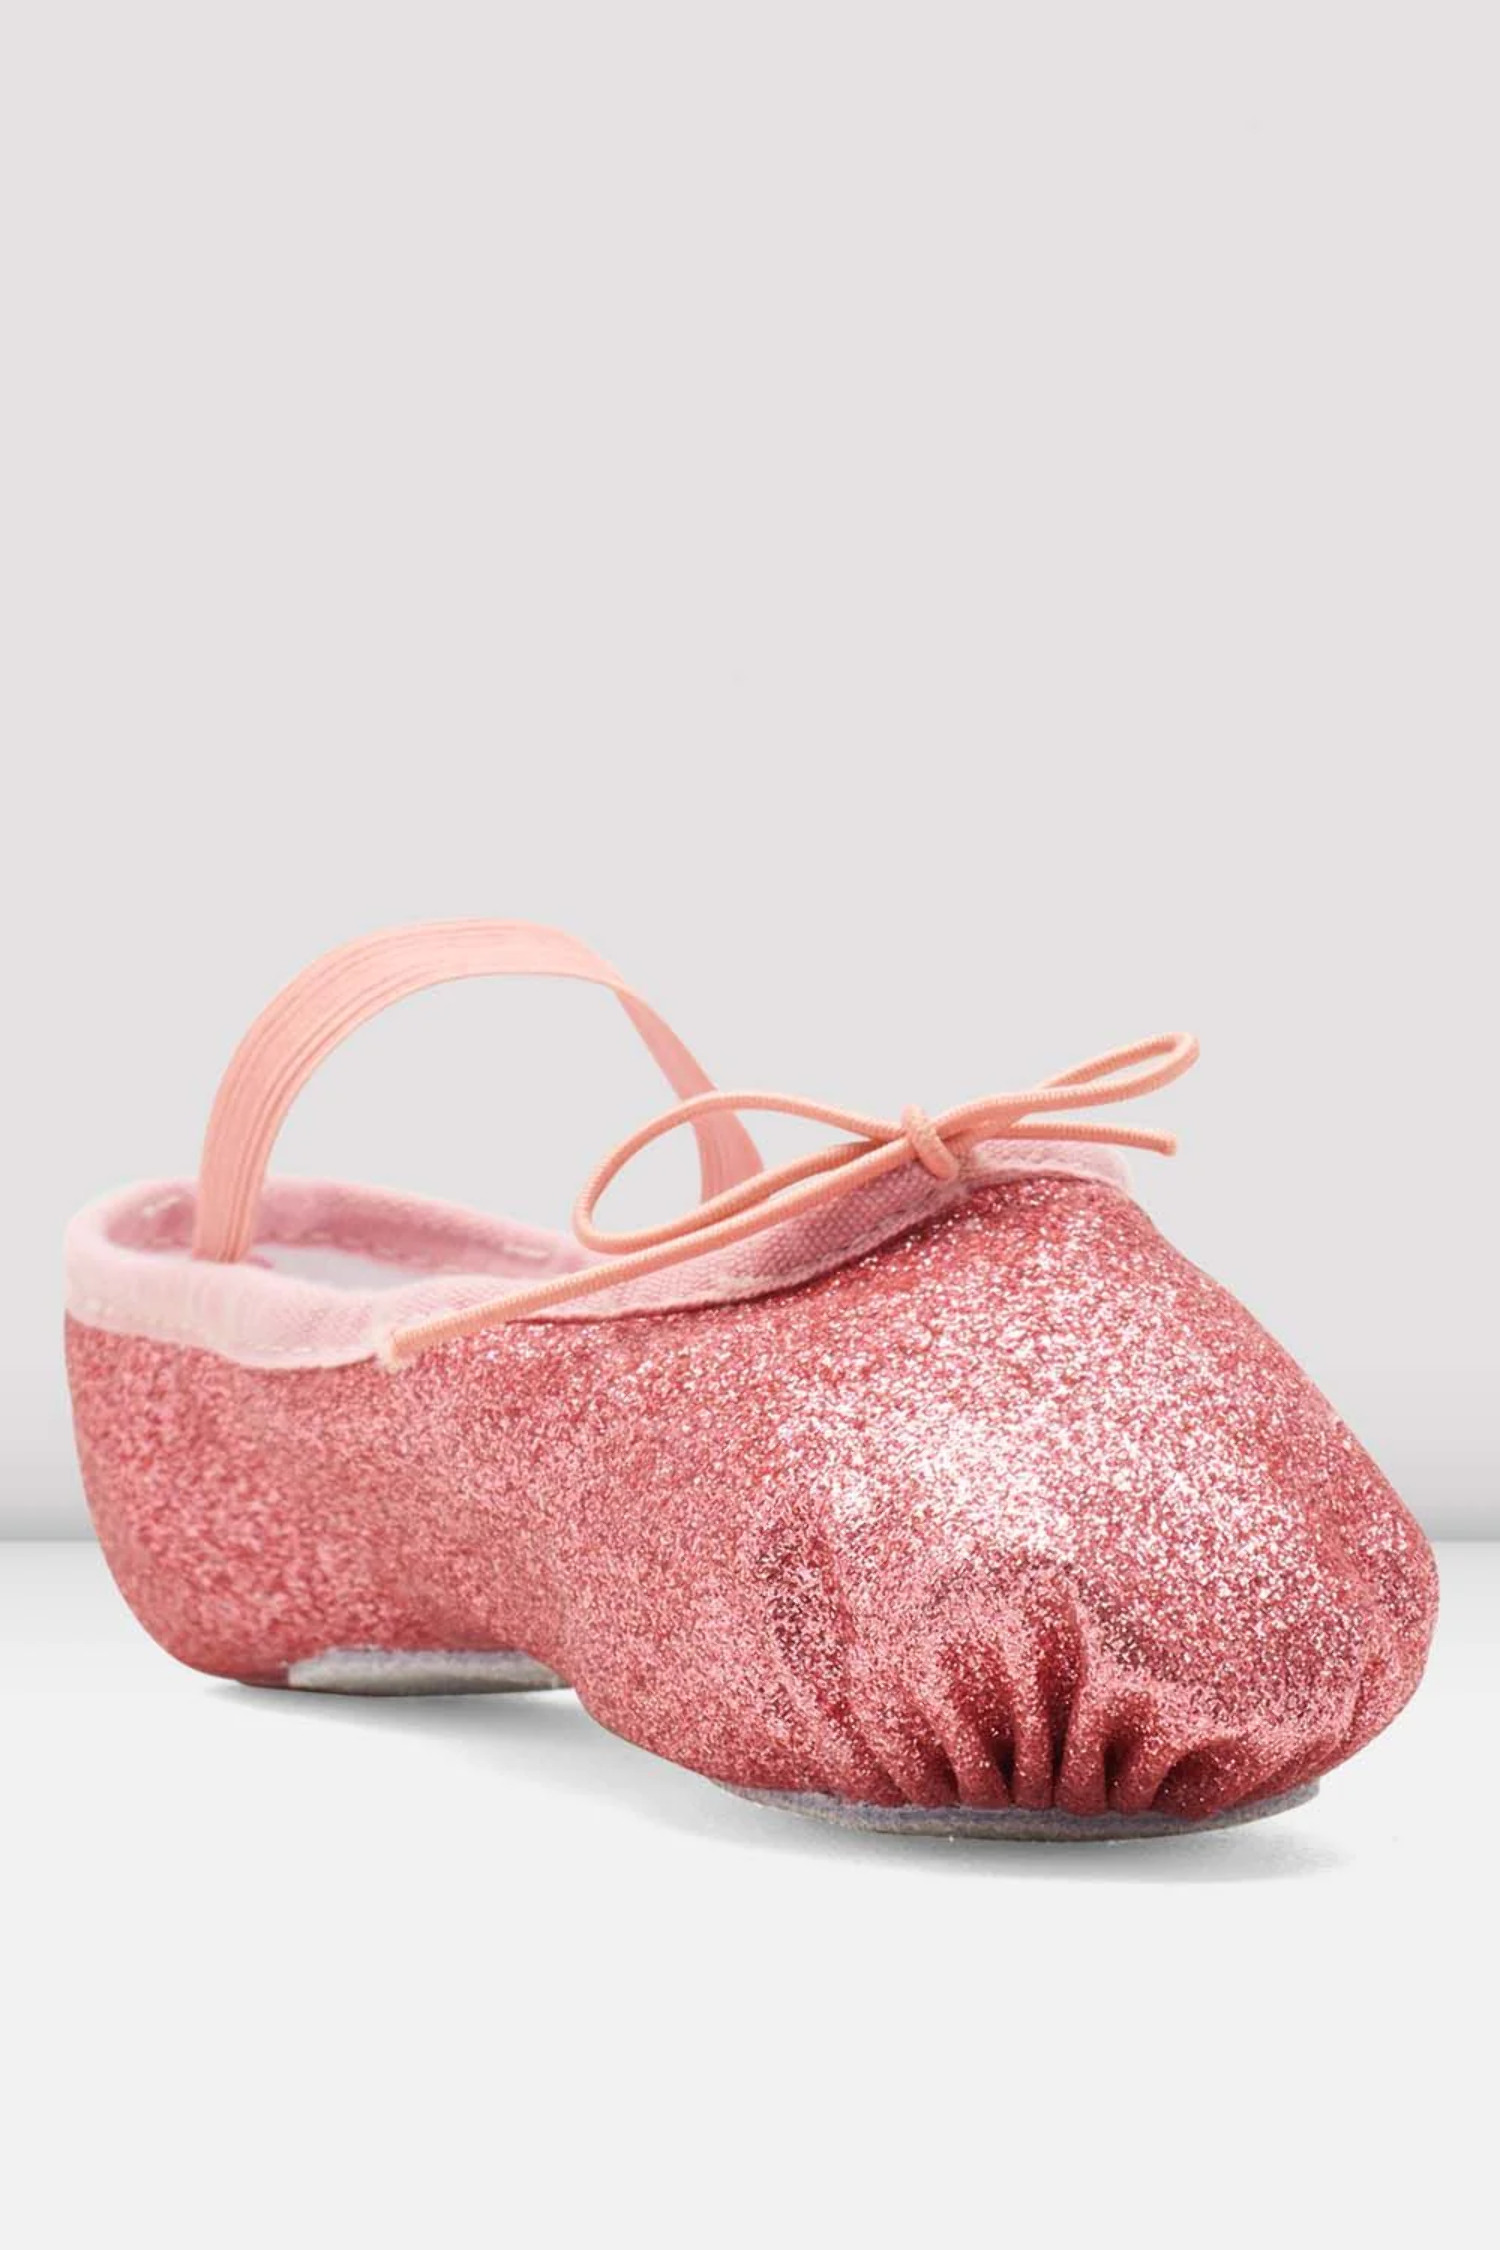 BLOCH Childrens Glitterdust Ballet Shoes, Rose - image 3 of 9